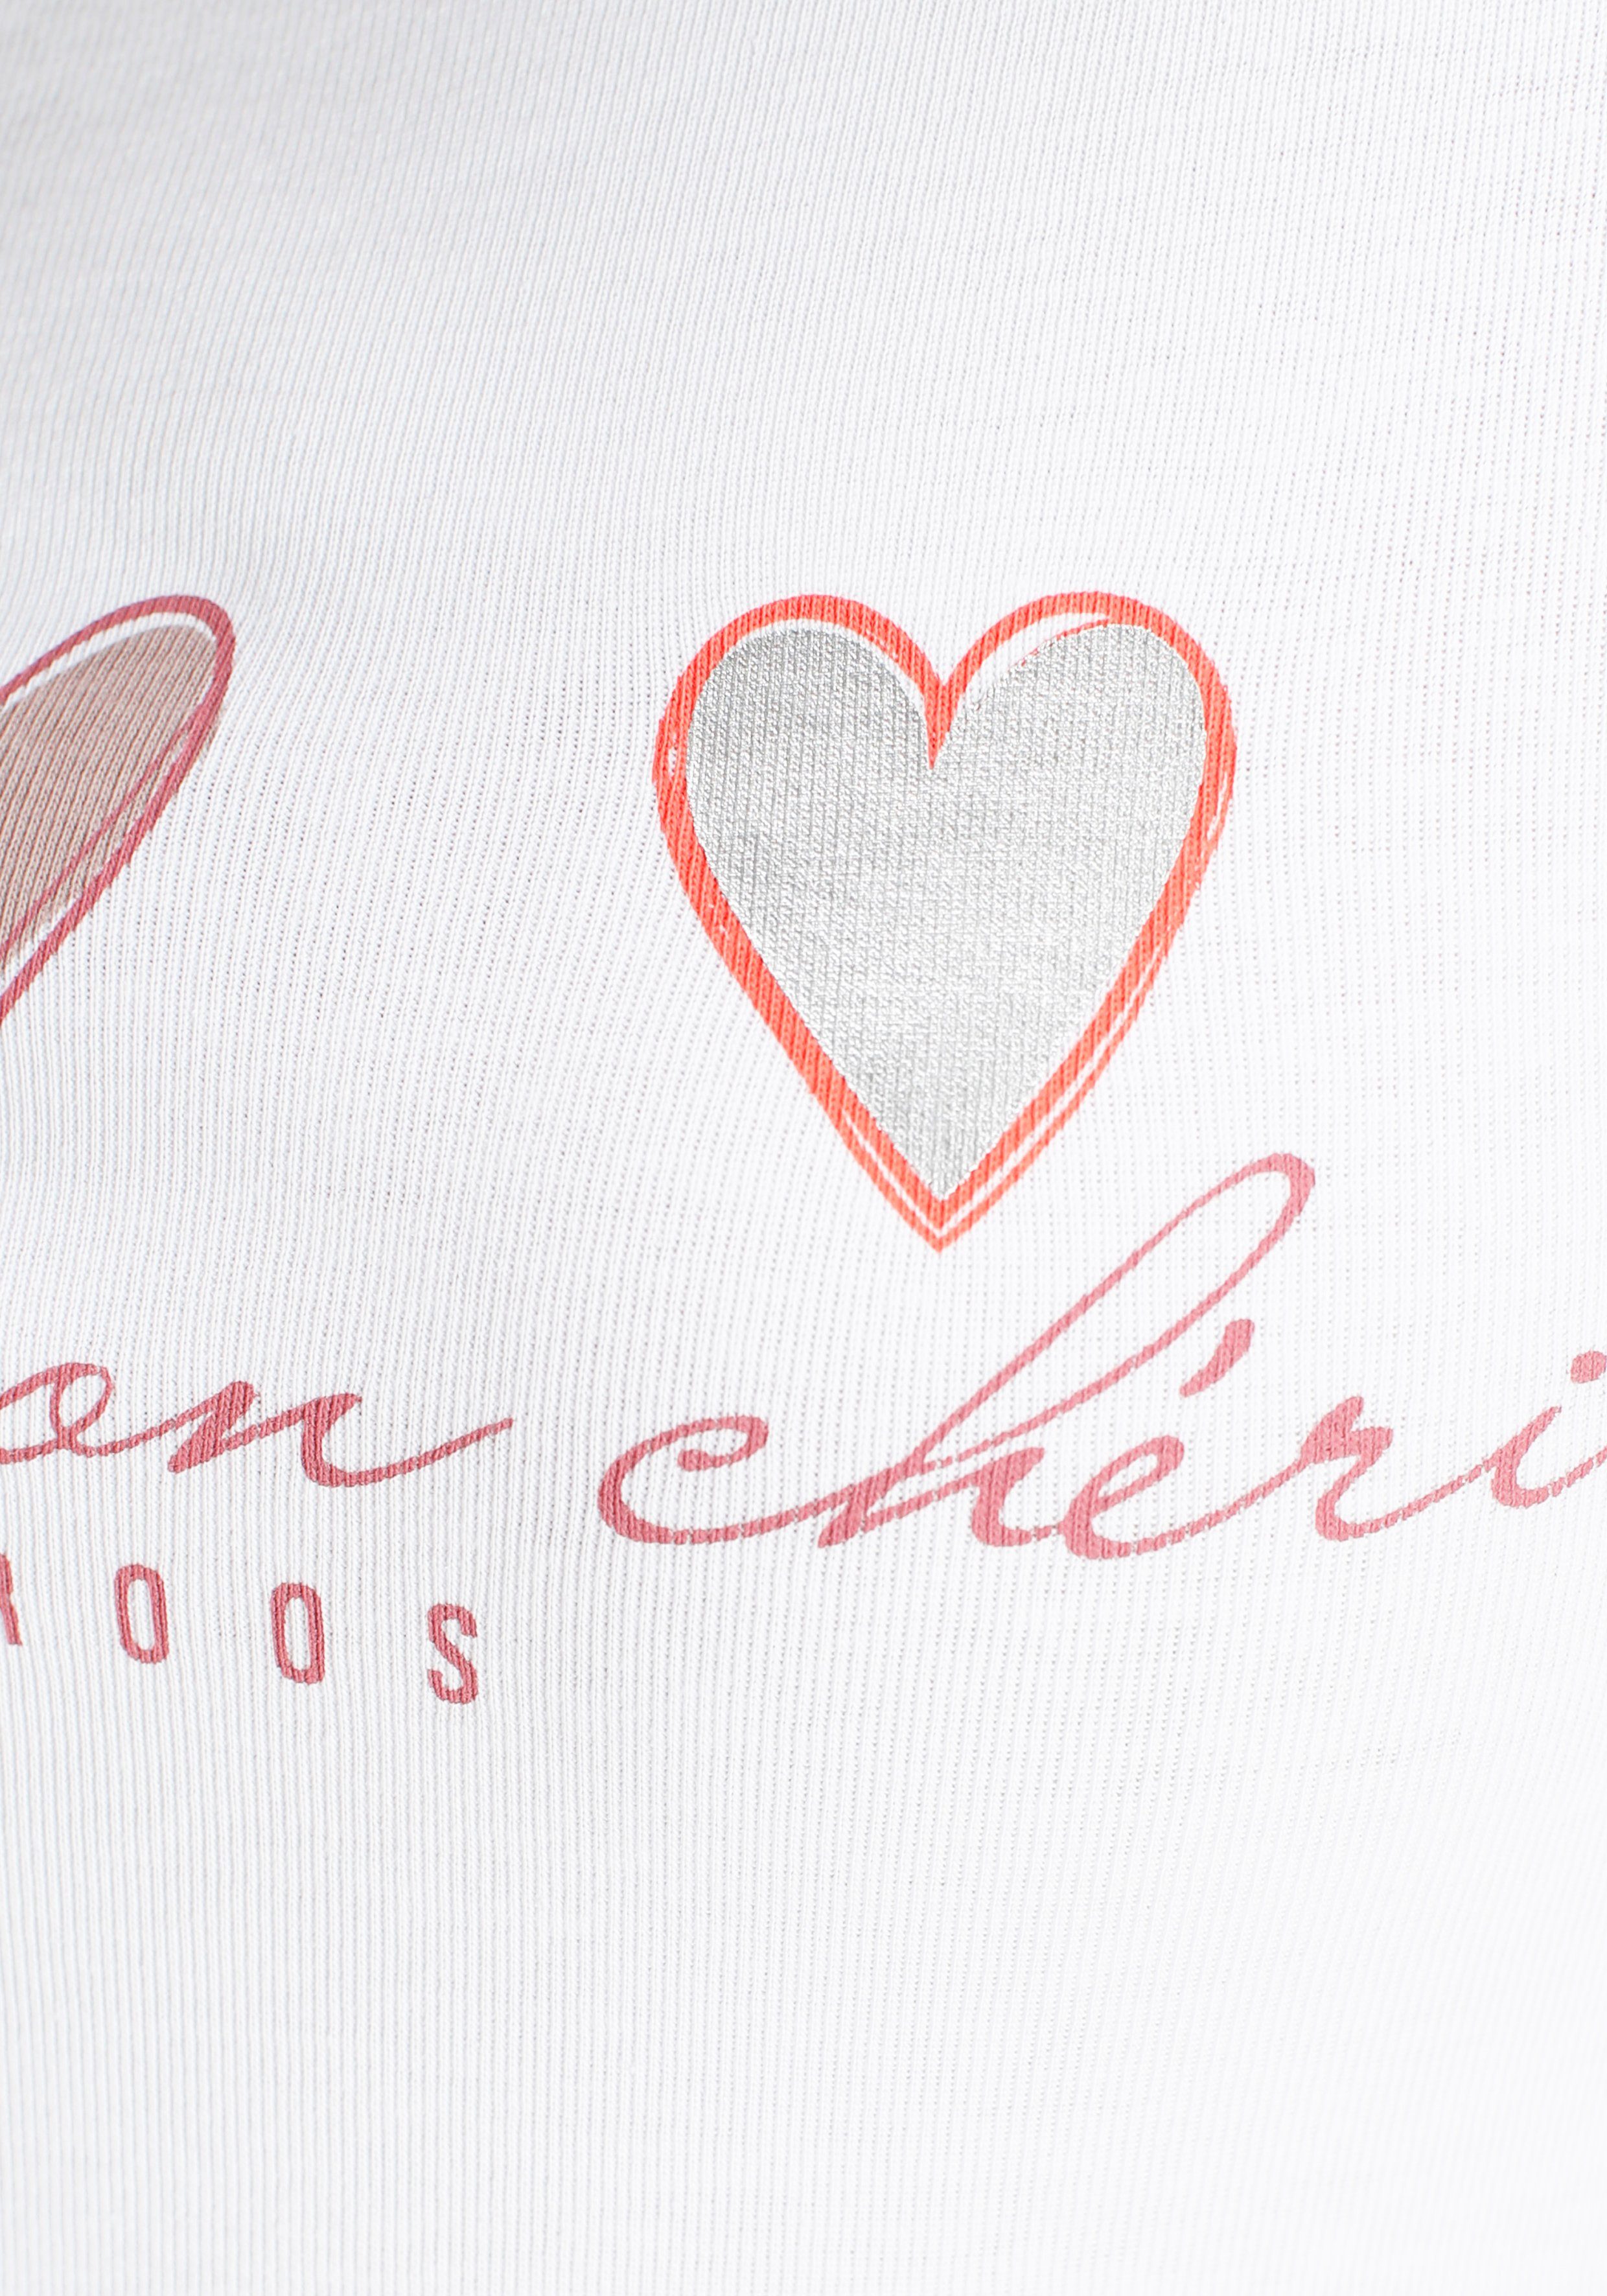 Longsleeve weiß KOLLEKTION NEUE Herz-Logodruck süßen KangaROOS mit -